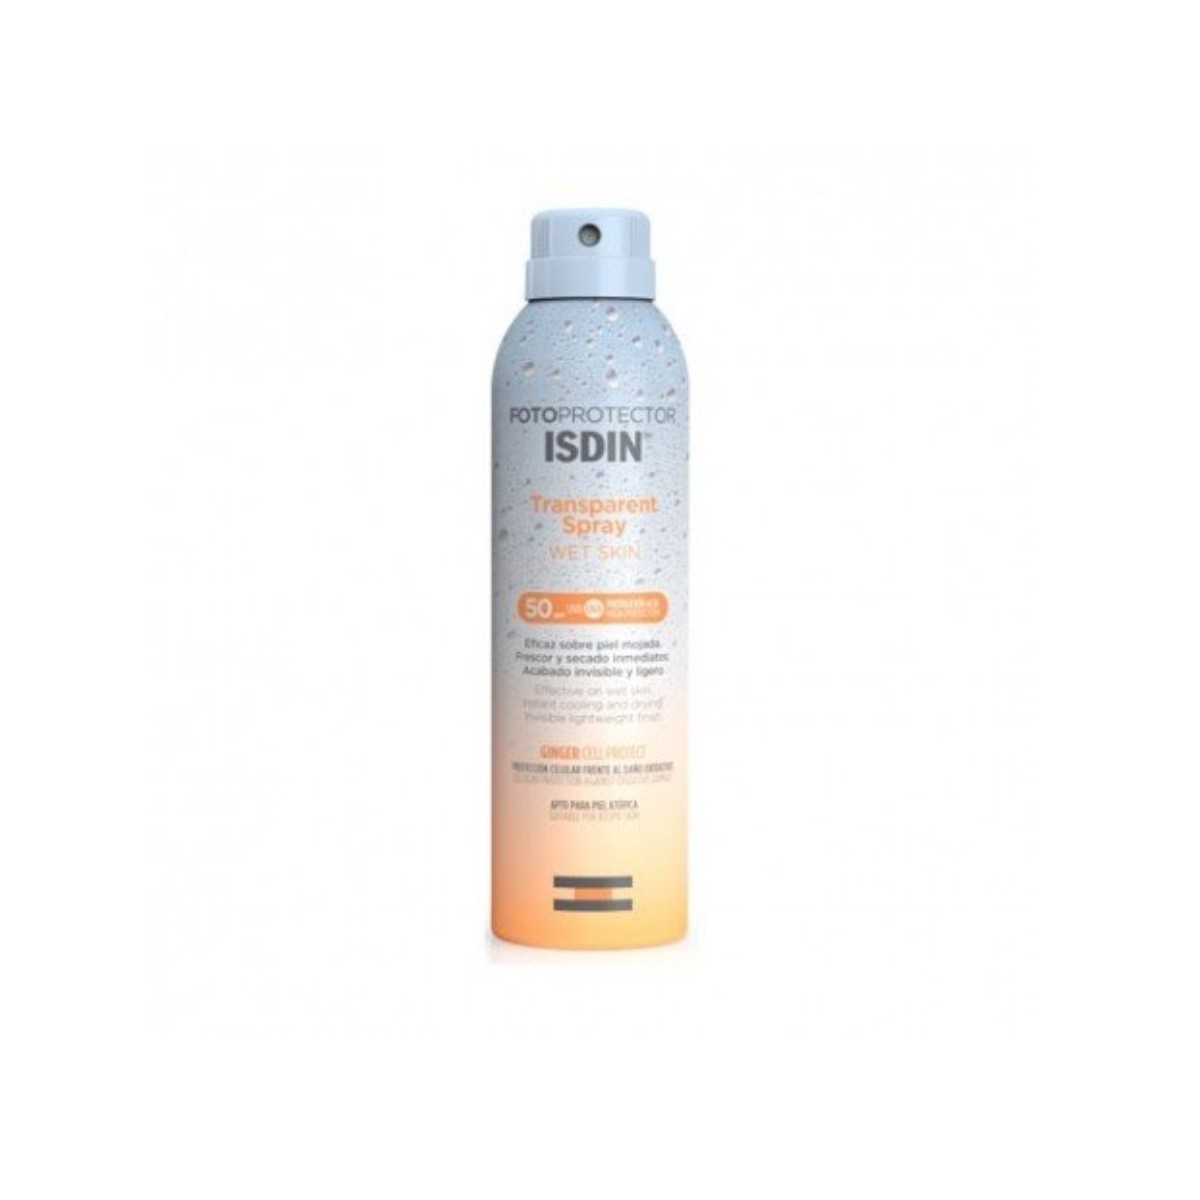 fotoprotector-isdin-transparent-spray-wet-skin-spf-50-250-ml